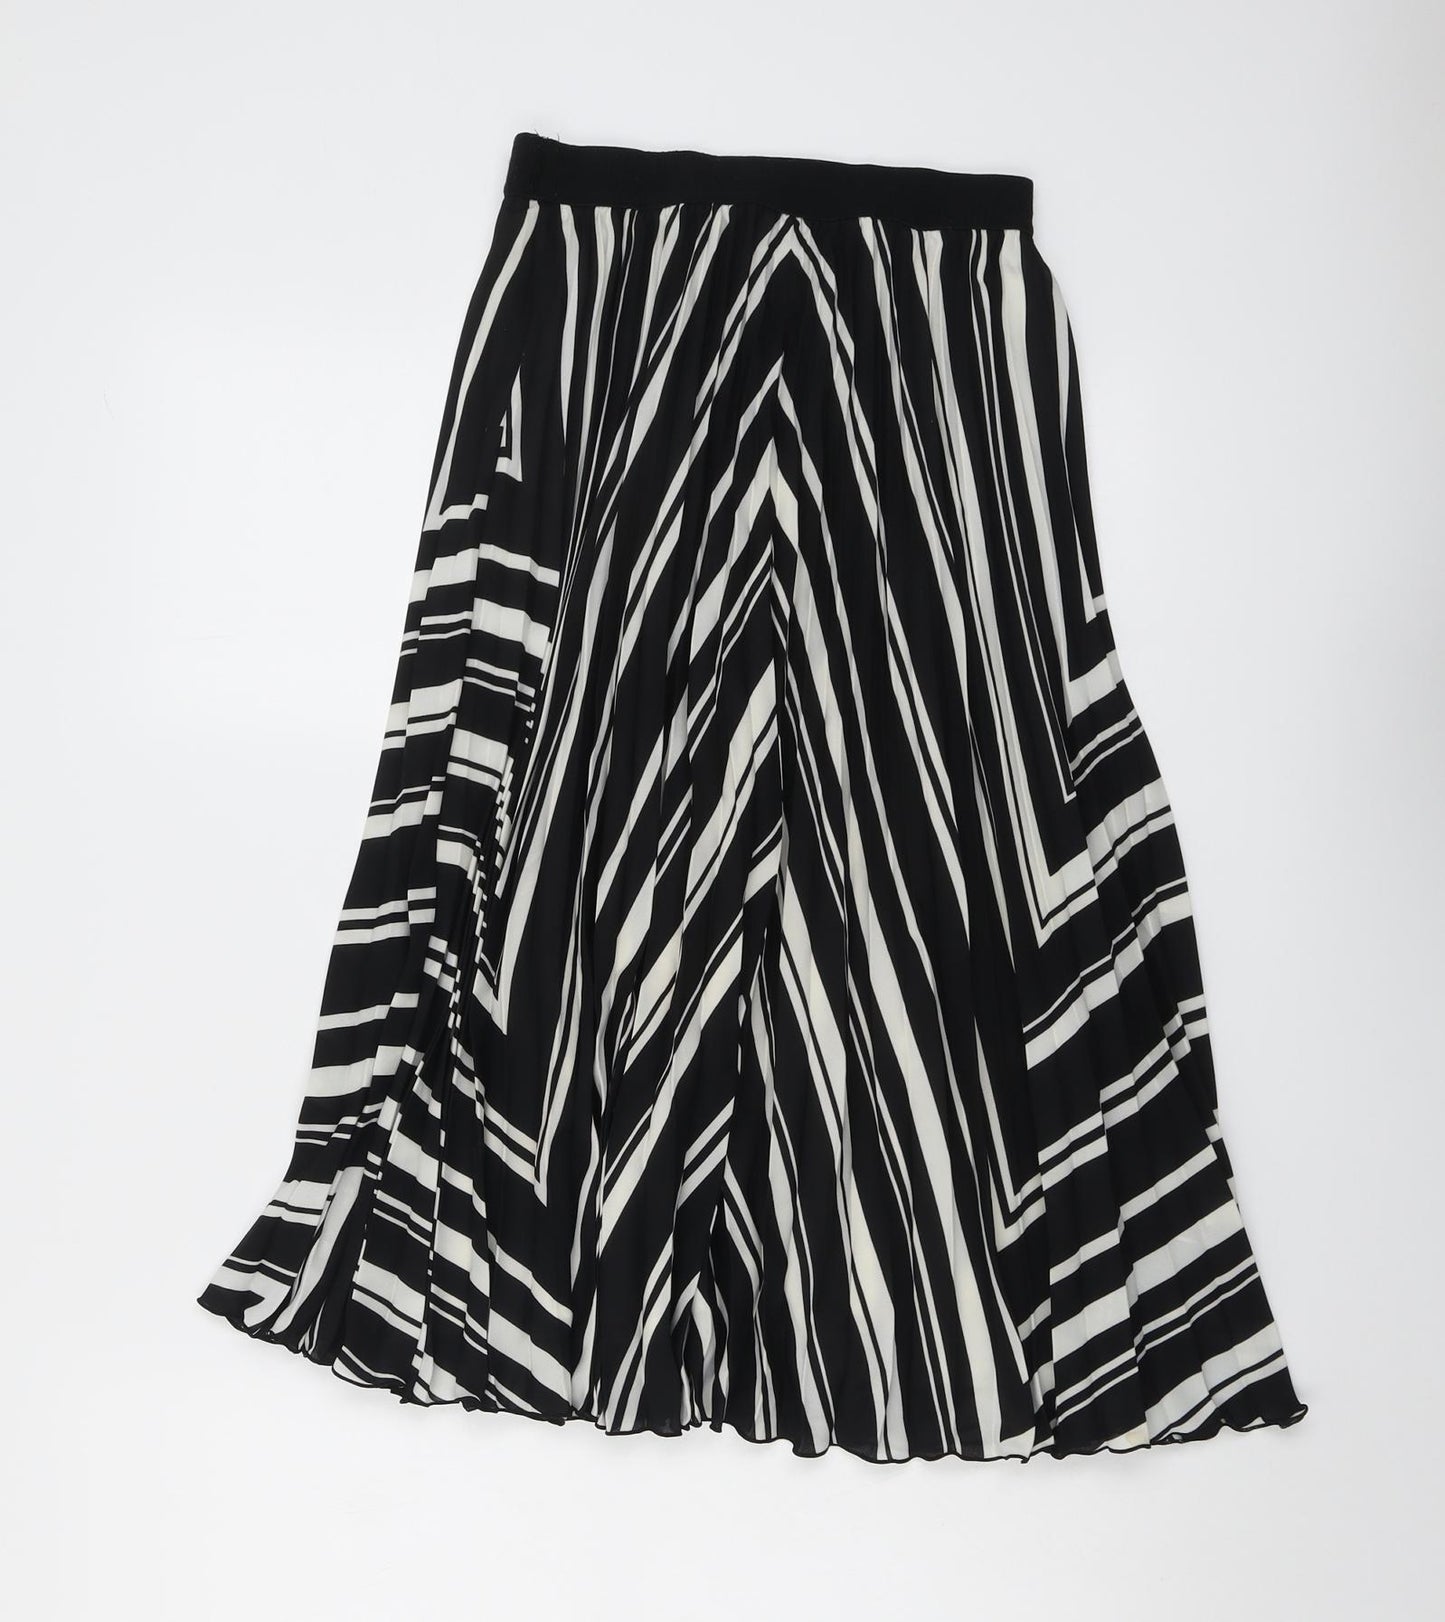 H&M Womens Black Striped Polyester Swing Skirt Size 6